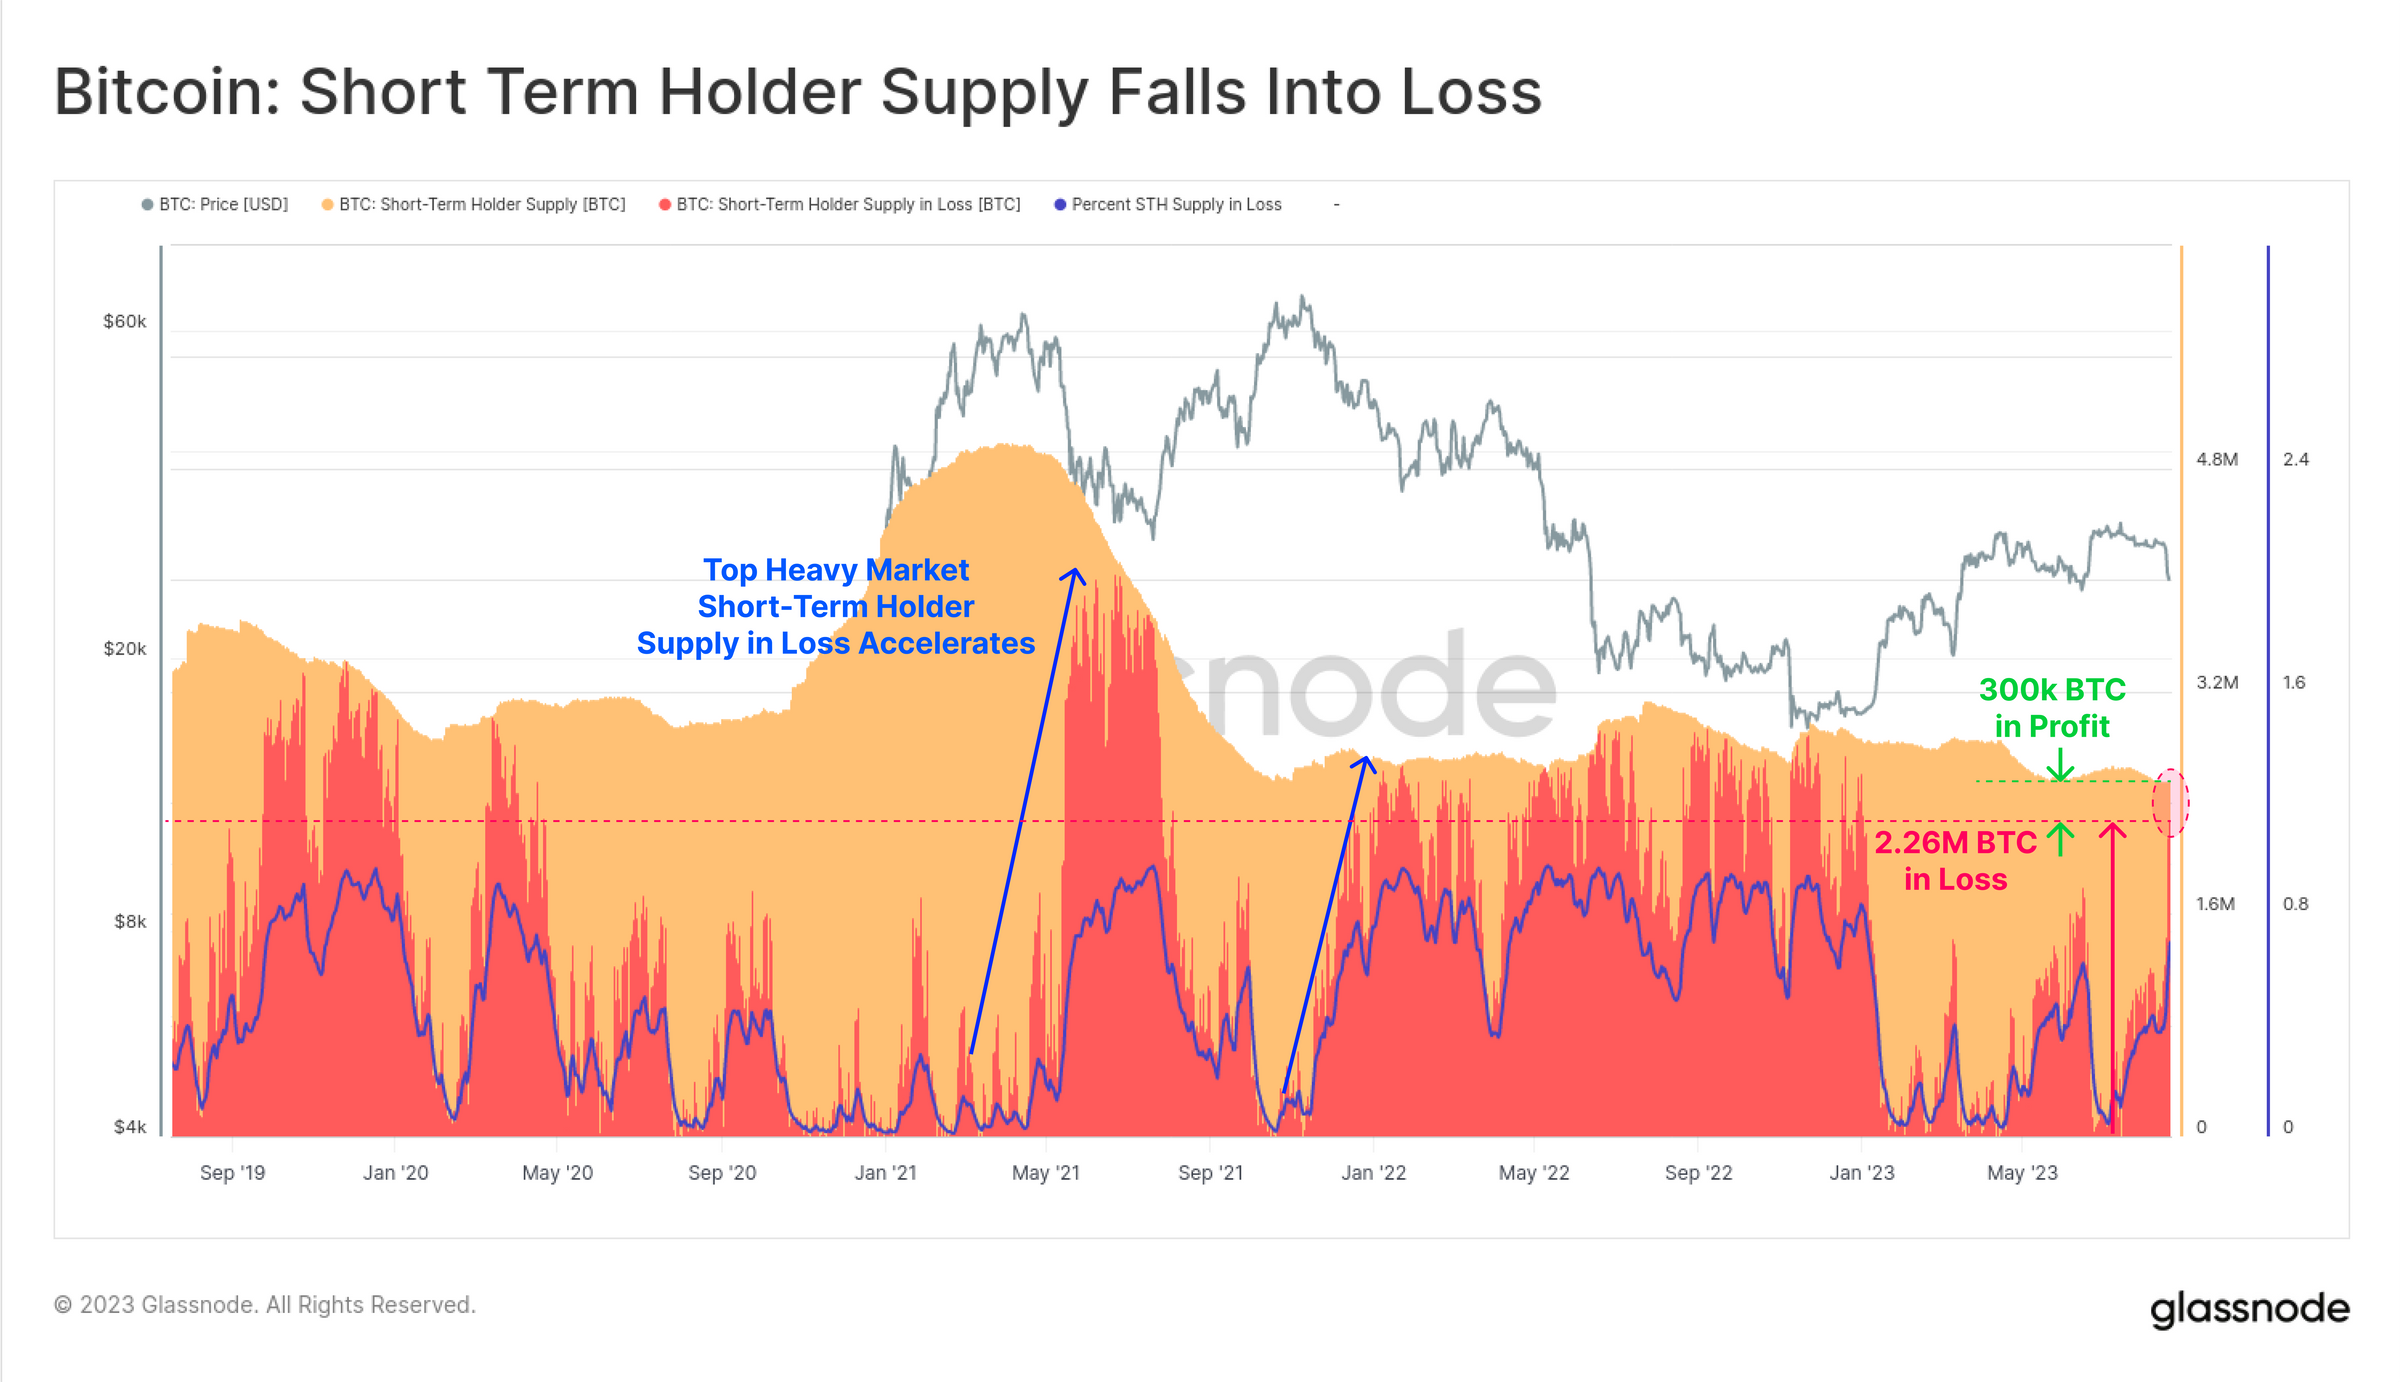 Bitcoin short-term holder supply as seen on Glassnode